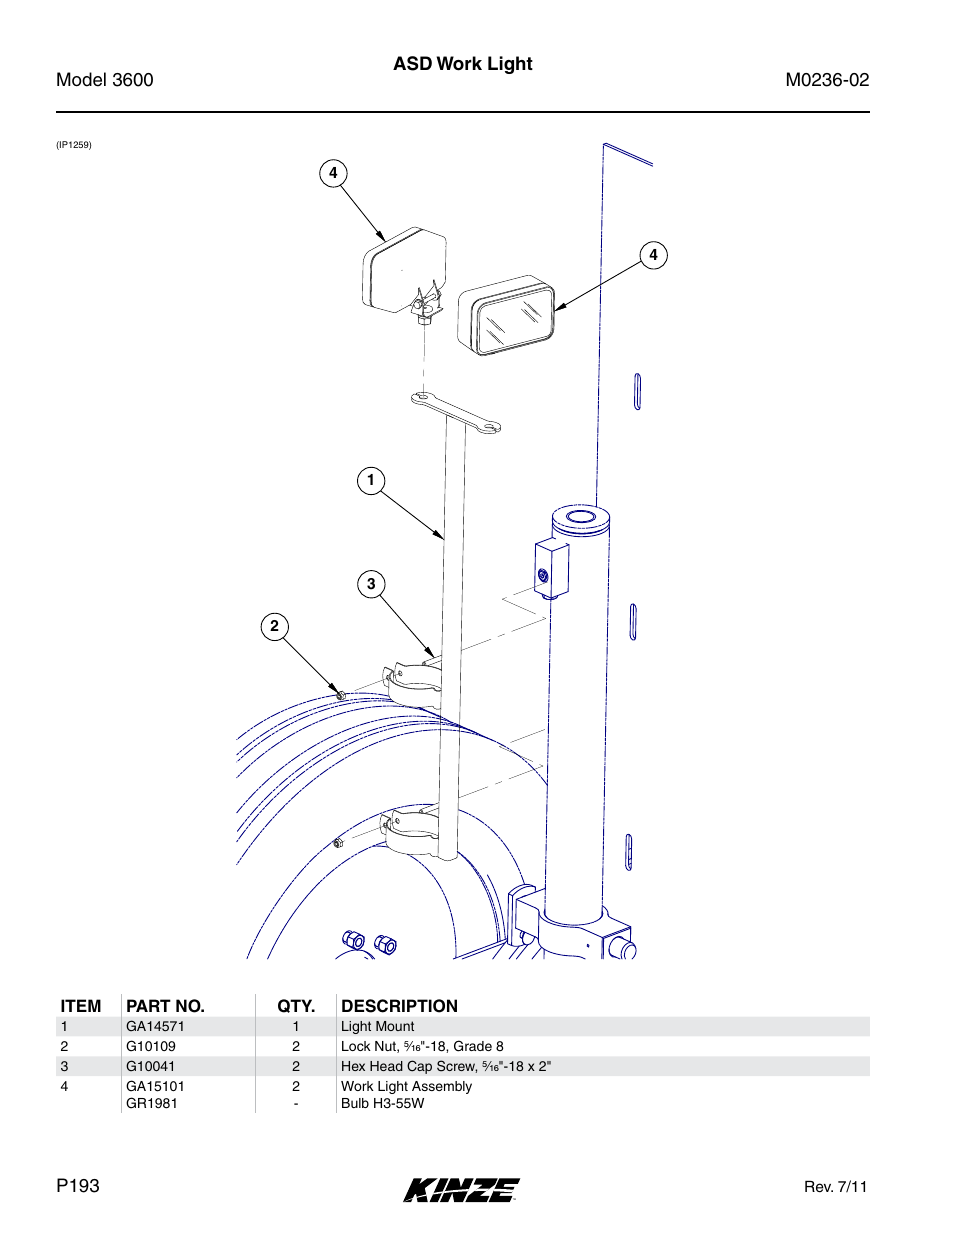 Electronics, Asd work light | Kinze 3600 Lift and Rotate Planter Rev. 5/14 User Manual | Page 196 / 302